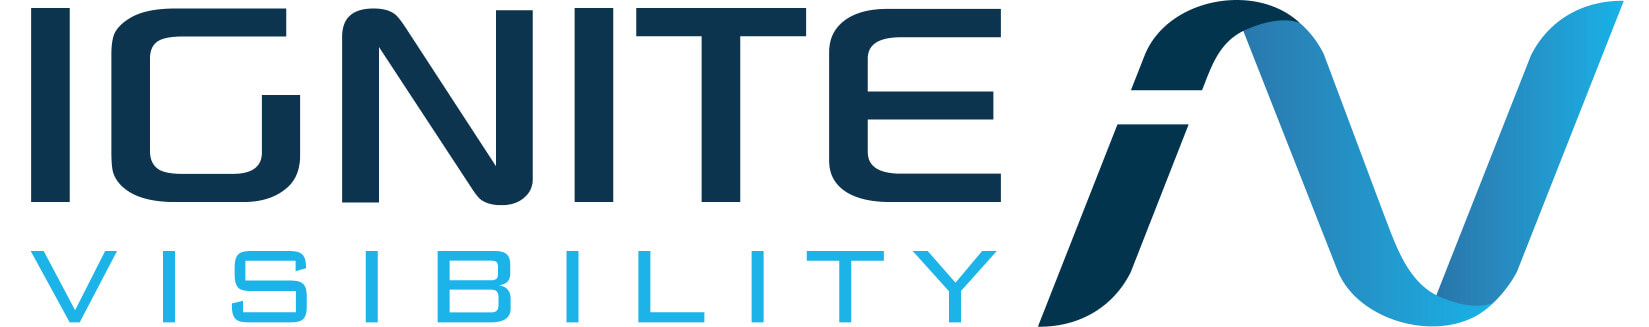 Top Local Online Marketing Company Logo: Ignite Visibility